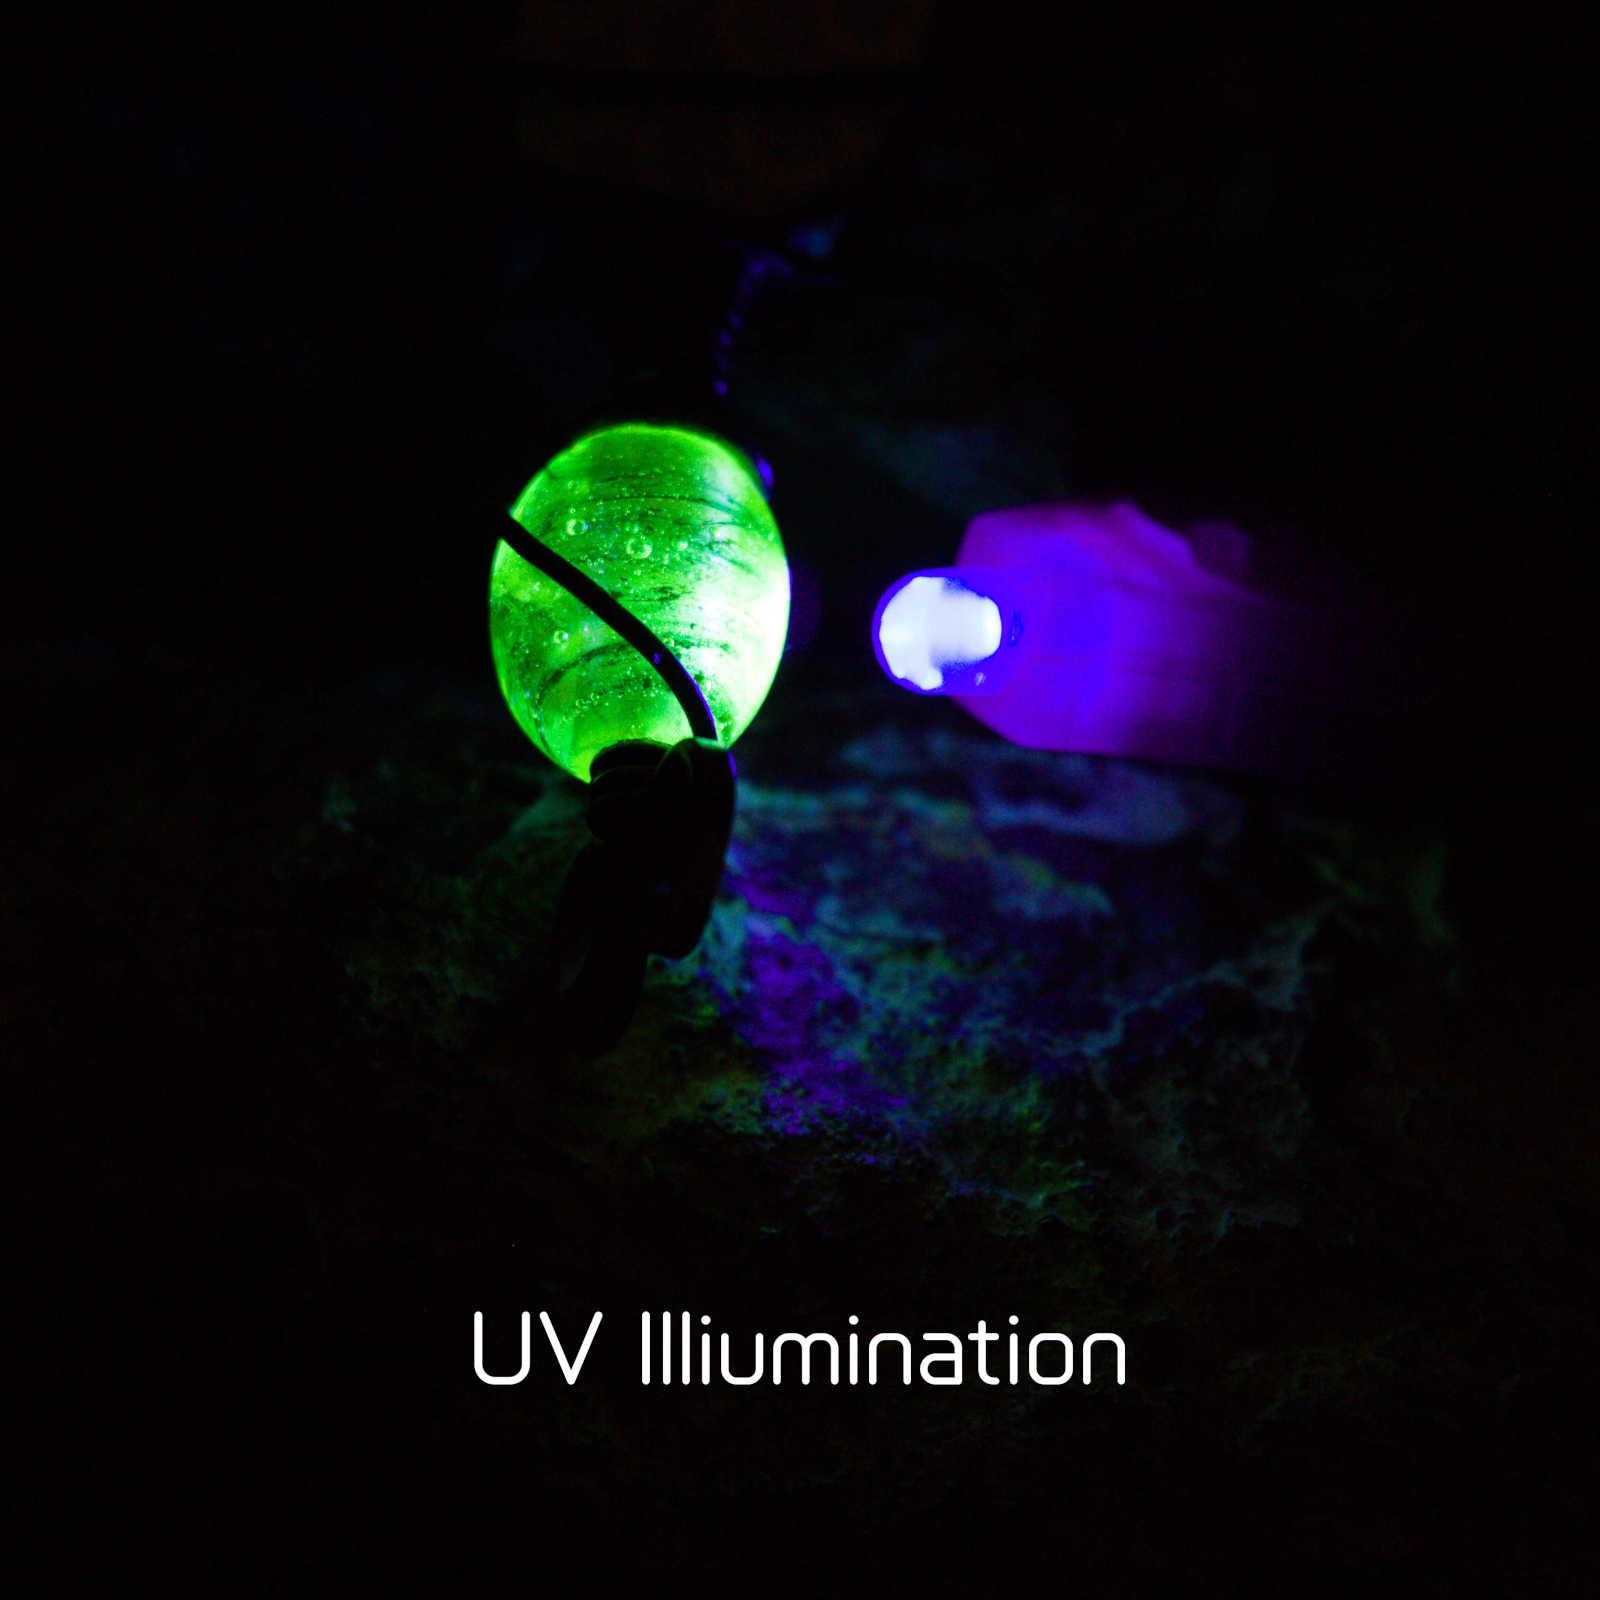 Uranium Glass Bead & Beach Pottery Accessory under UV Light